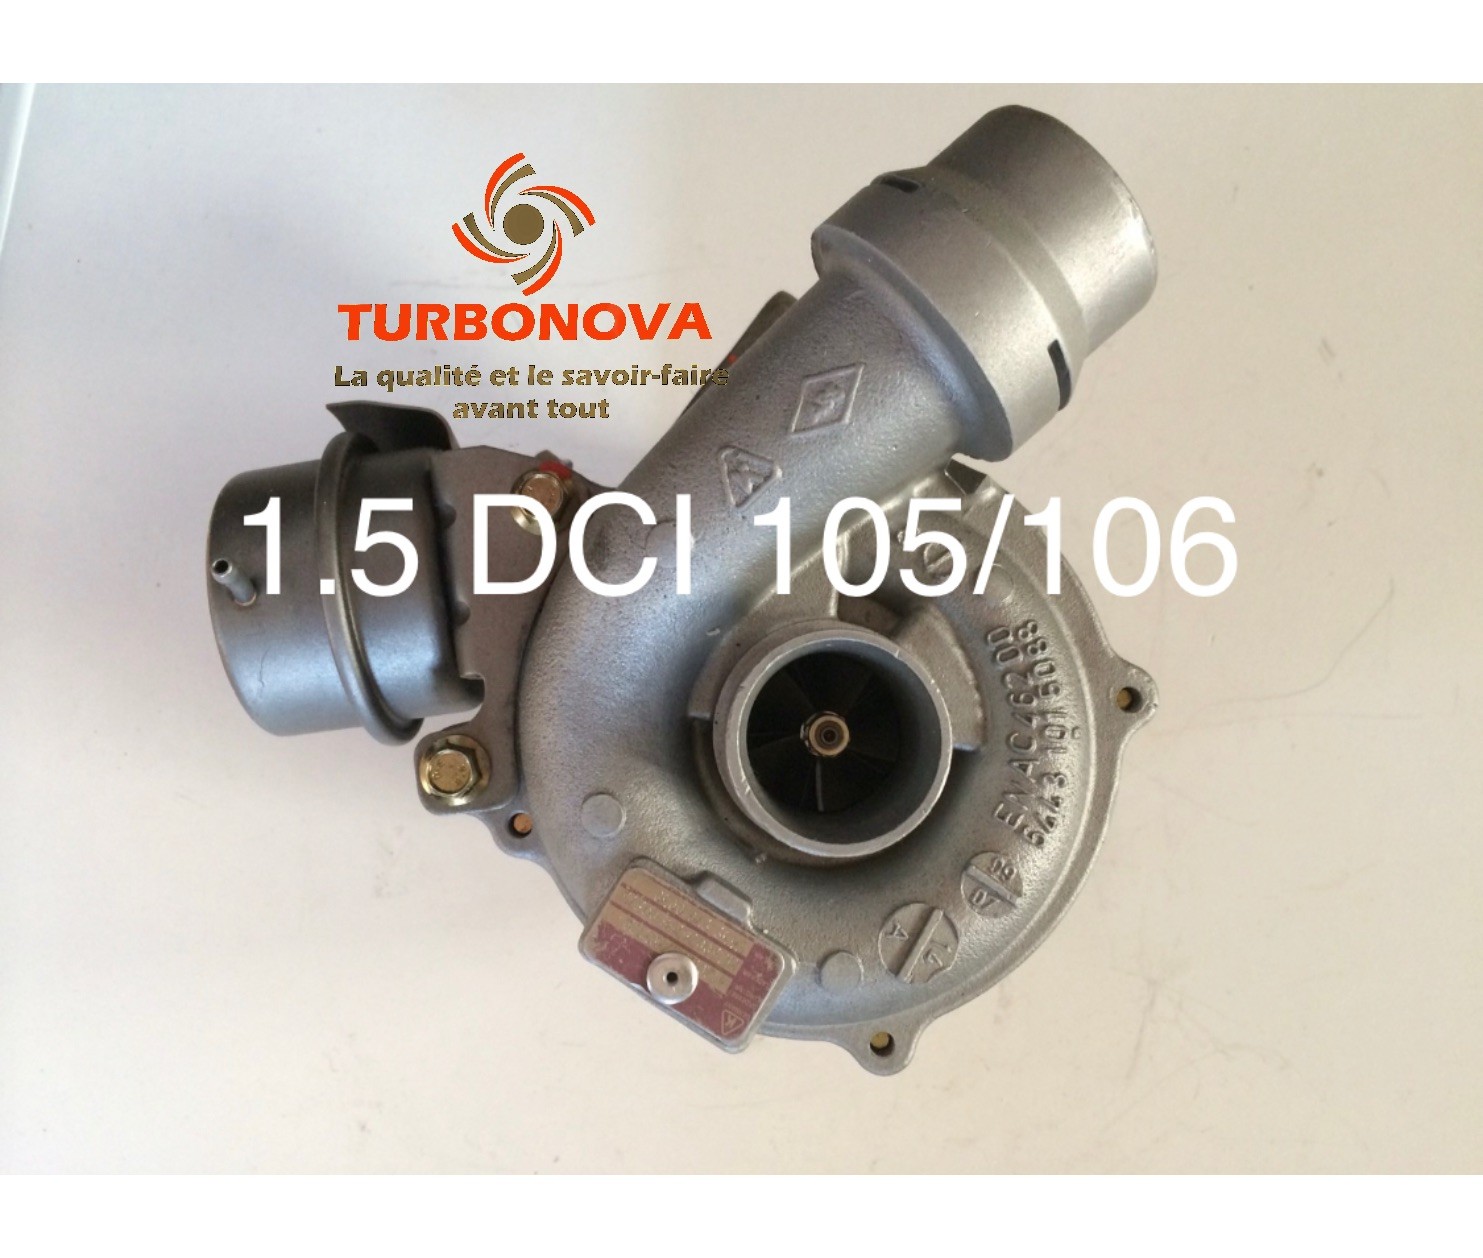 Reconditionnement turbo 1.5 DCI 105